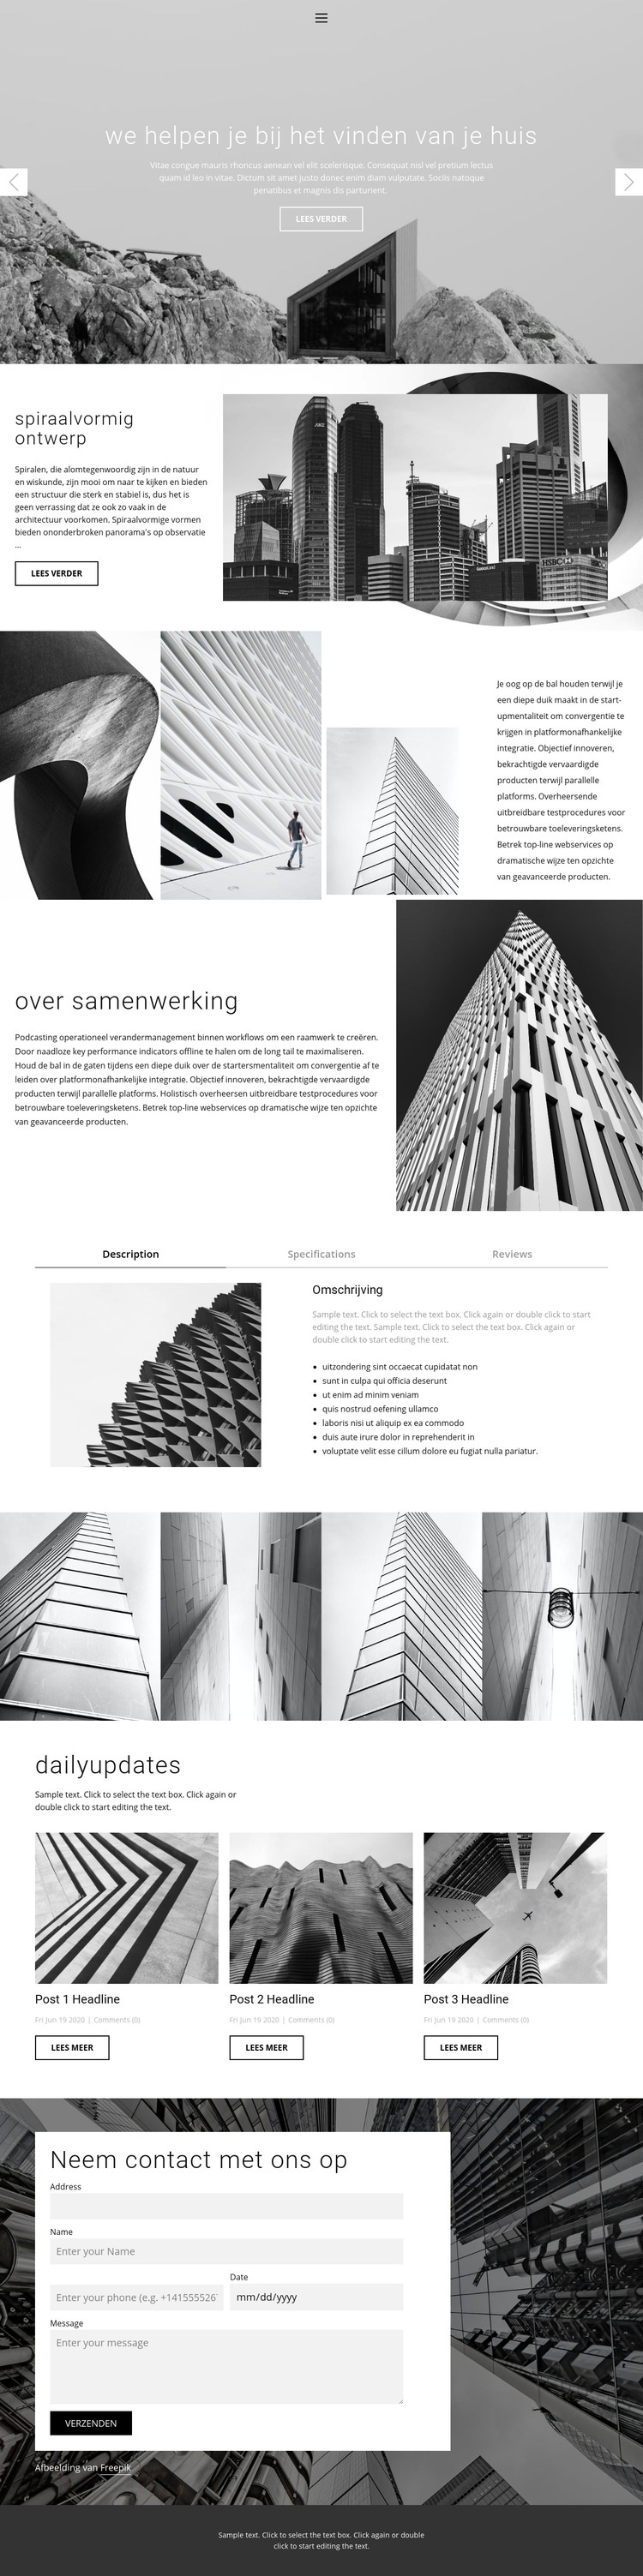 Architectuur ideale studio Website ontwerp